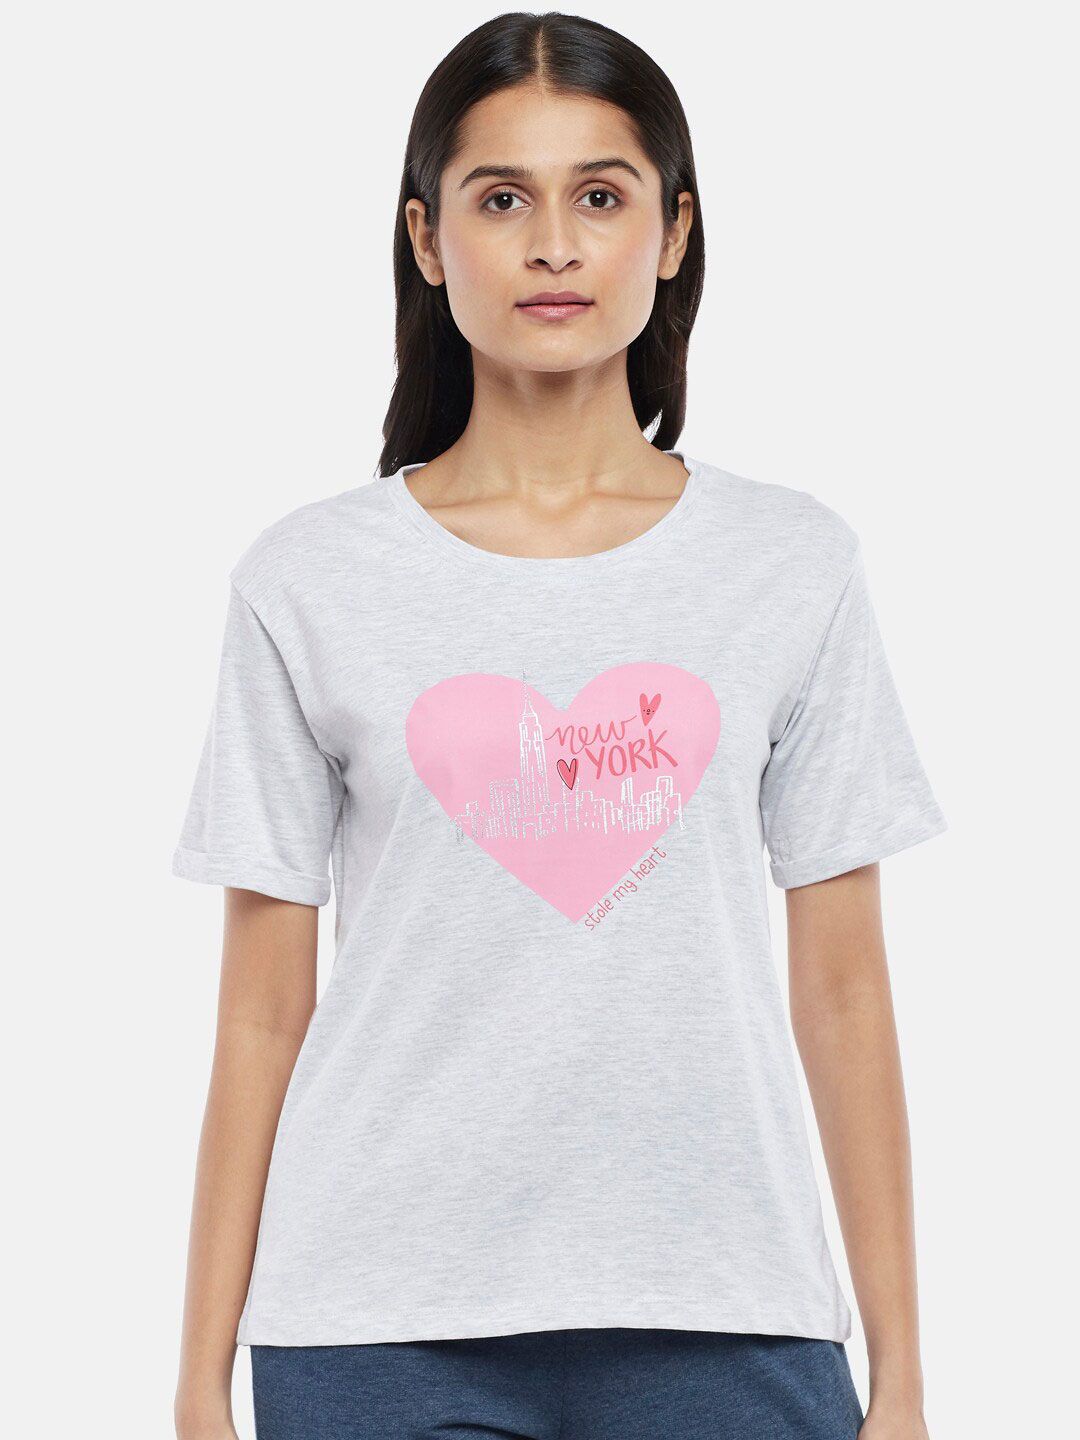 Dreamz by Pantaloons Women Grey Printed Lounge tshirt Price in India